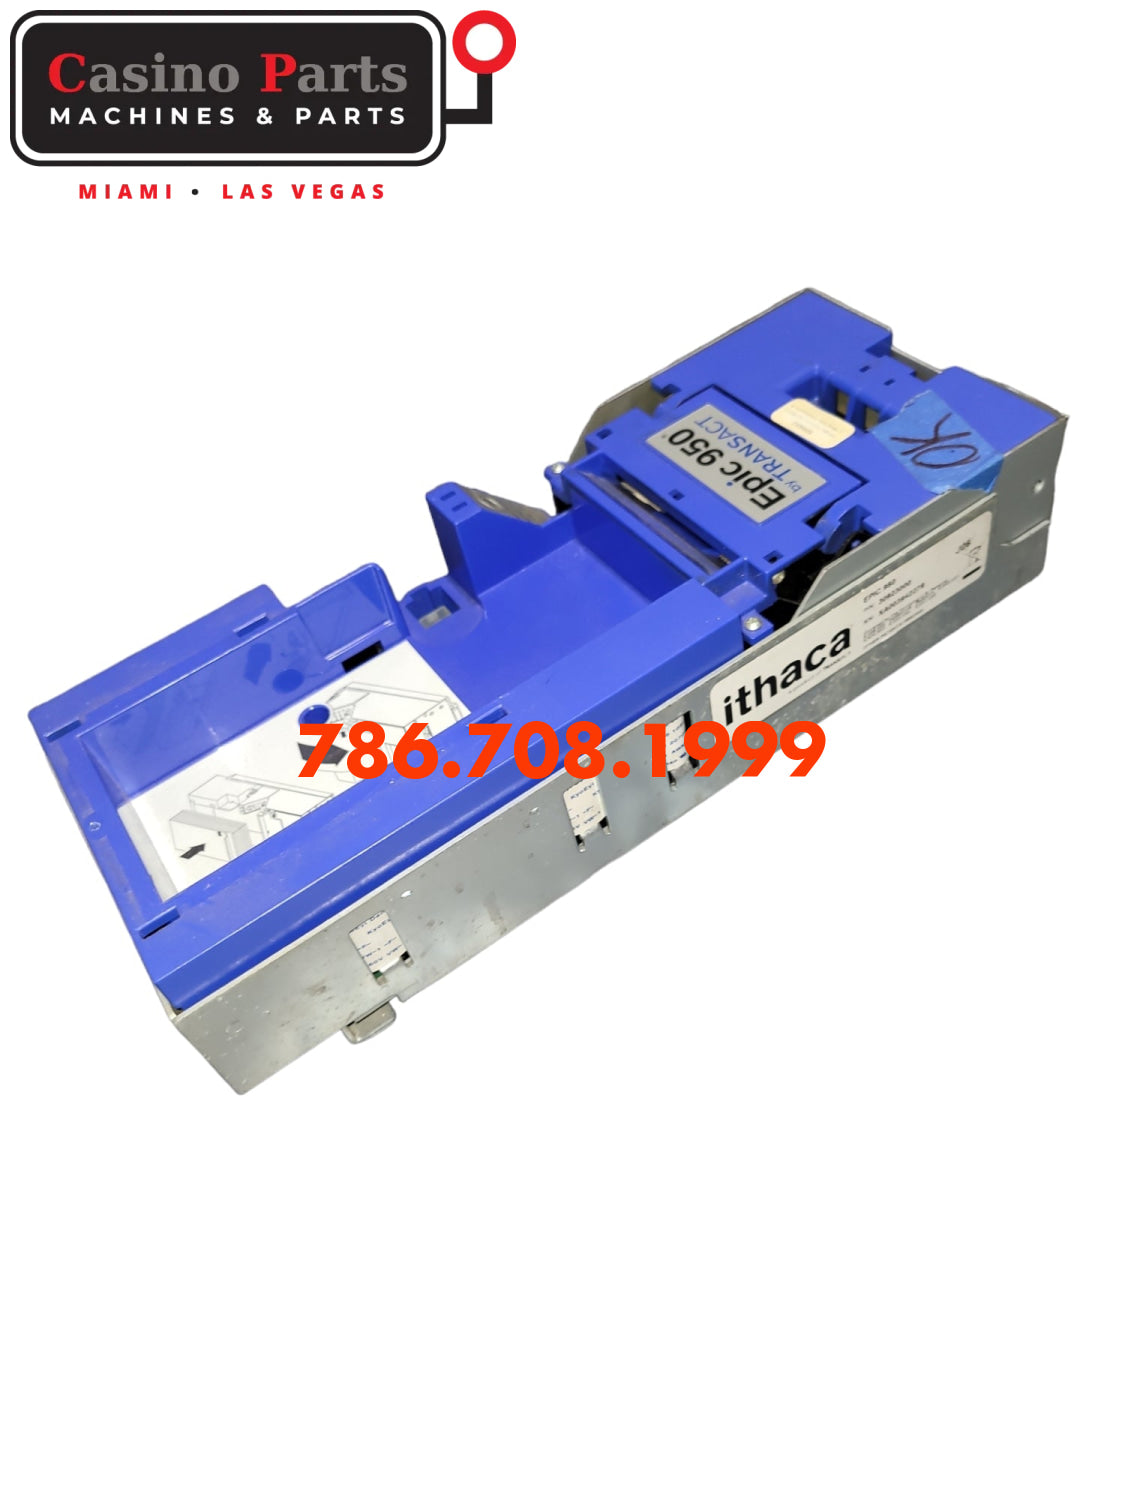 Epic 950 - Universal Ticket Printer Usb